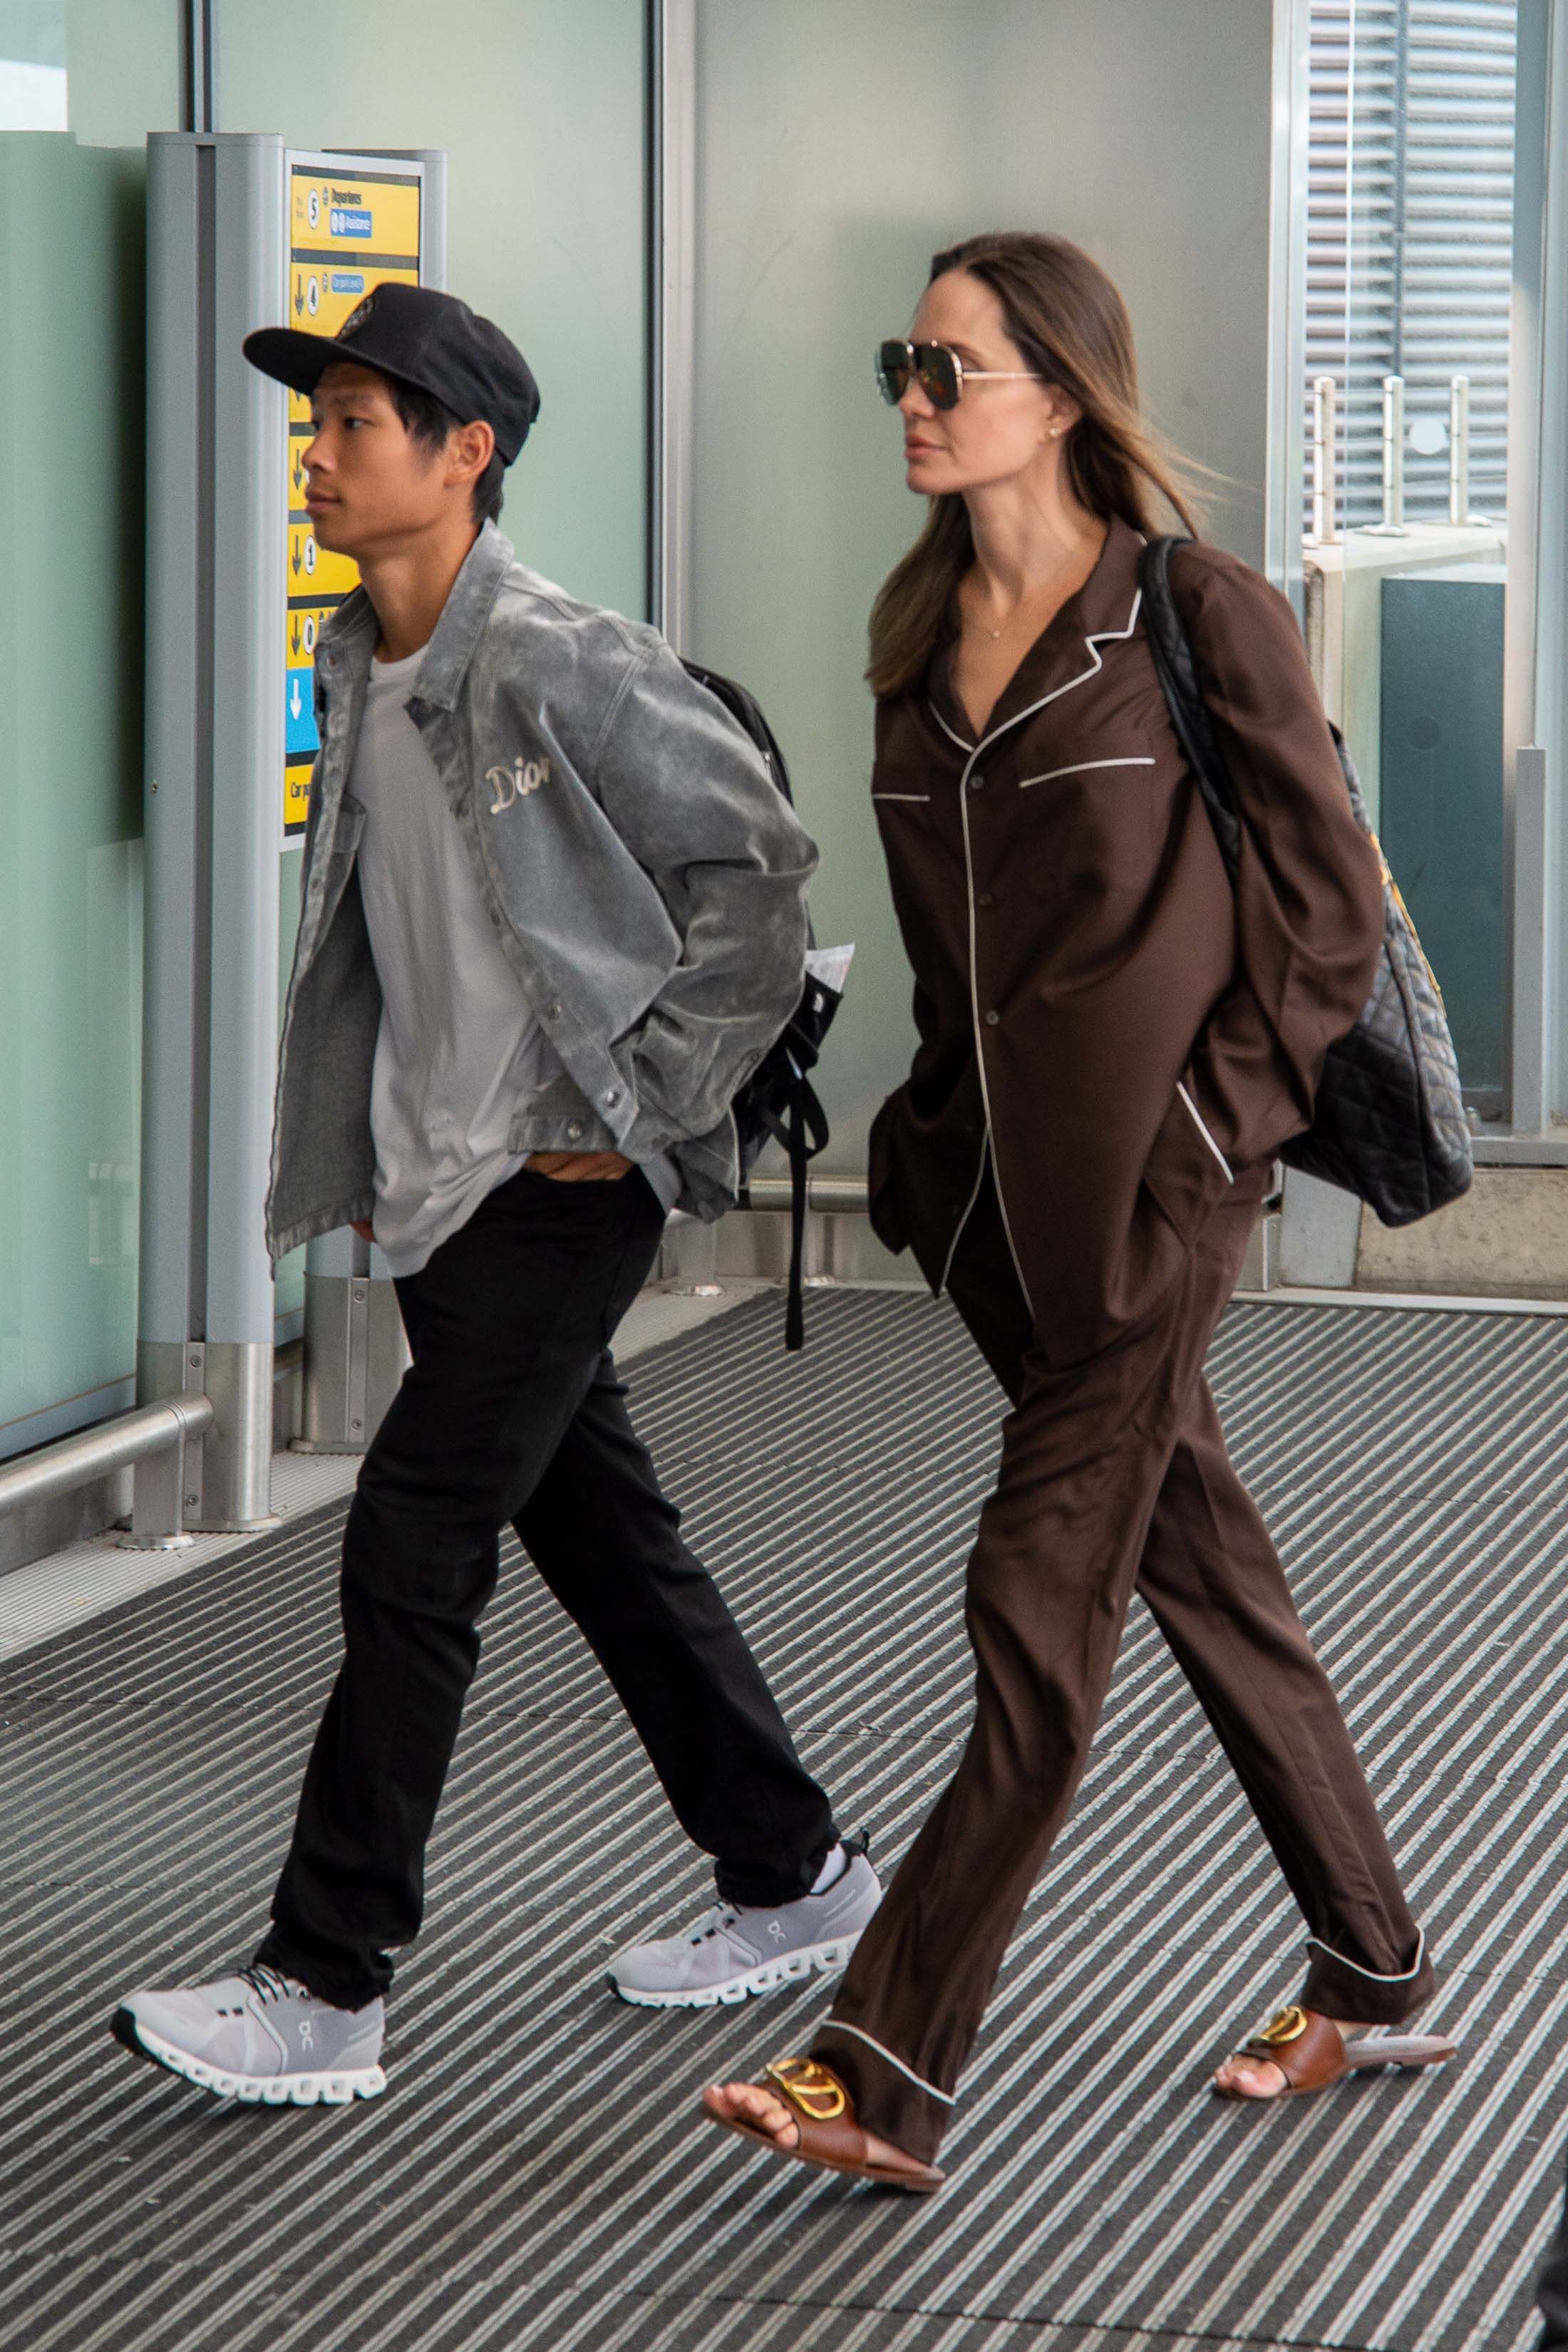 Angelina Jolie wears her pyjamas to the airport